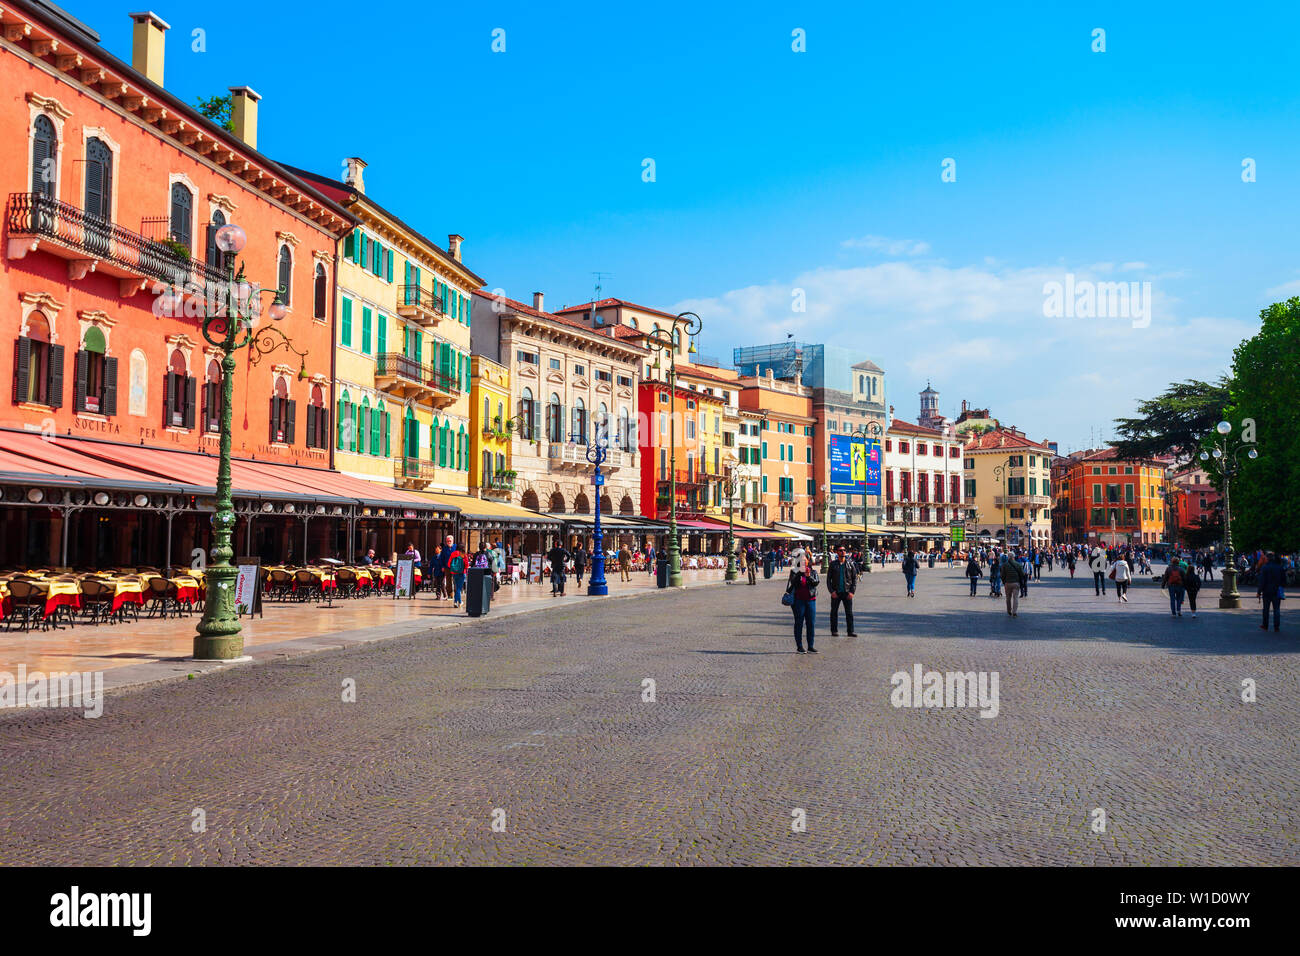 VERONA, ITALY - APRIL 16, 2019: The Piazza Bra square in Verona city in Veneto region of Italy Stock Photo